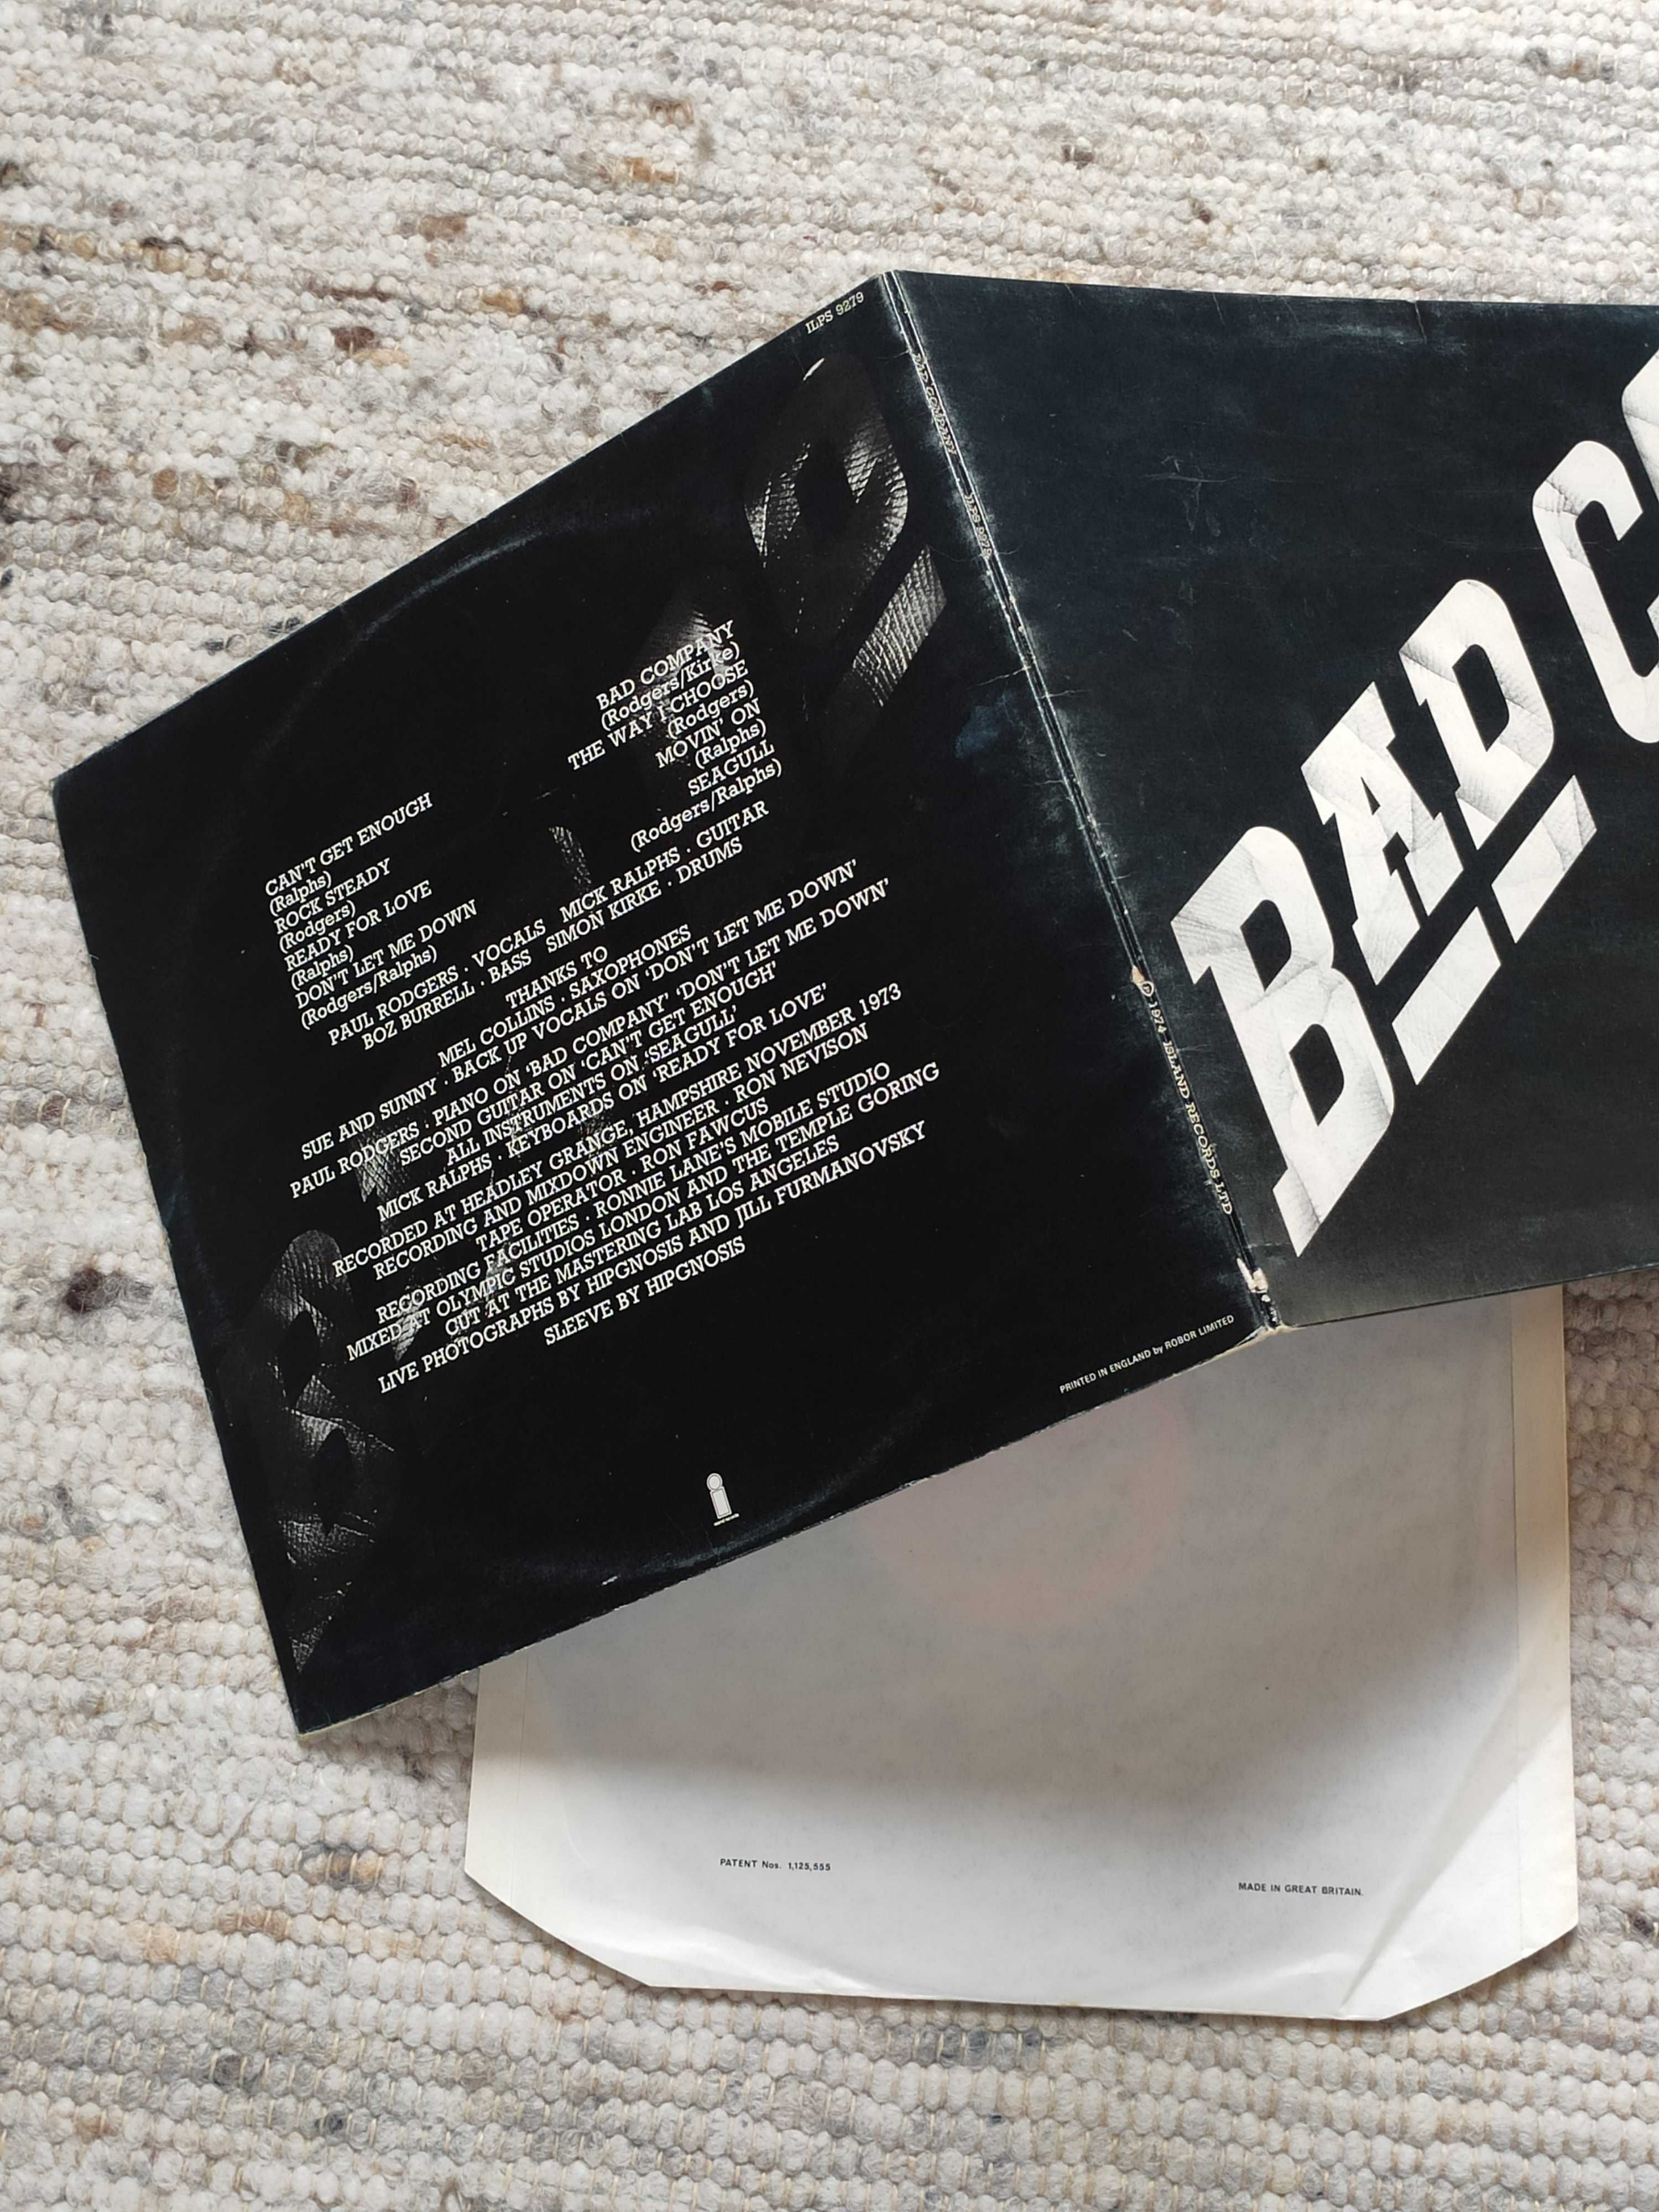 Bad Company (Free) LP Bad Company (debiut) 1. wyd. ang. 1974, winyl